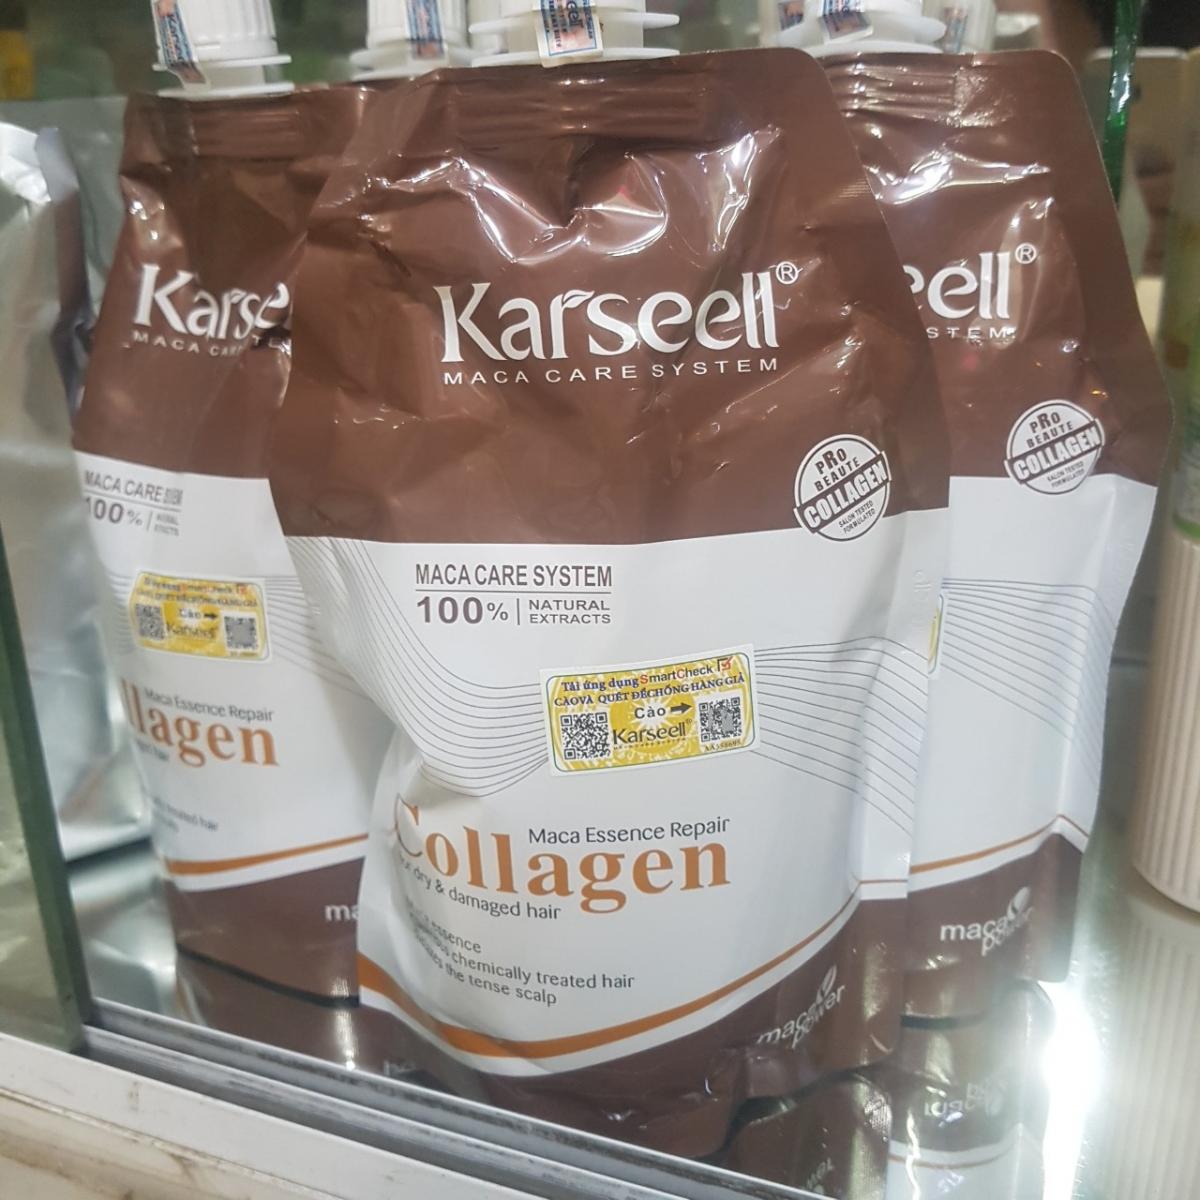 Kem hấp tóc Collagen Karseel 